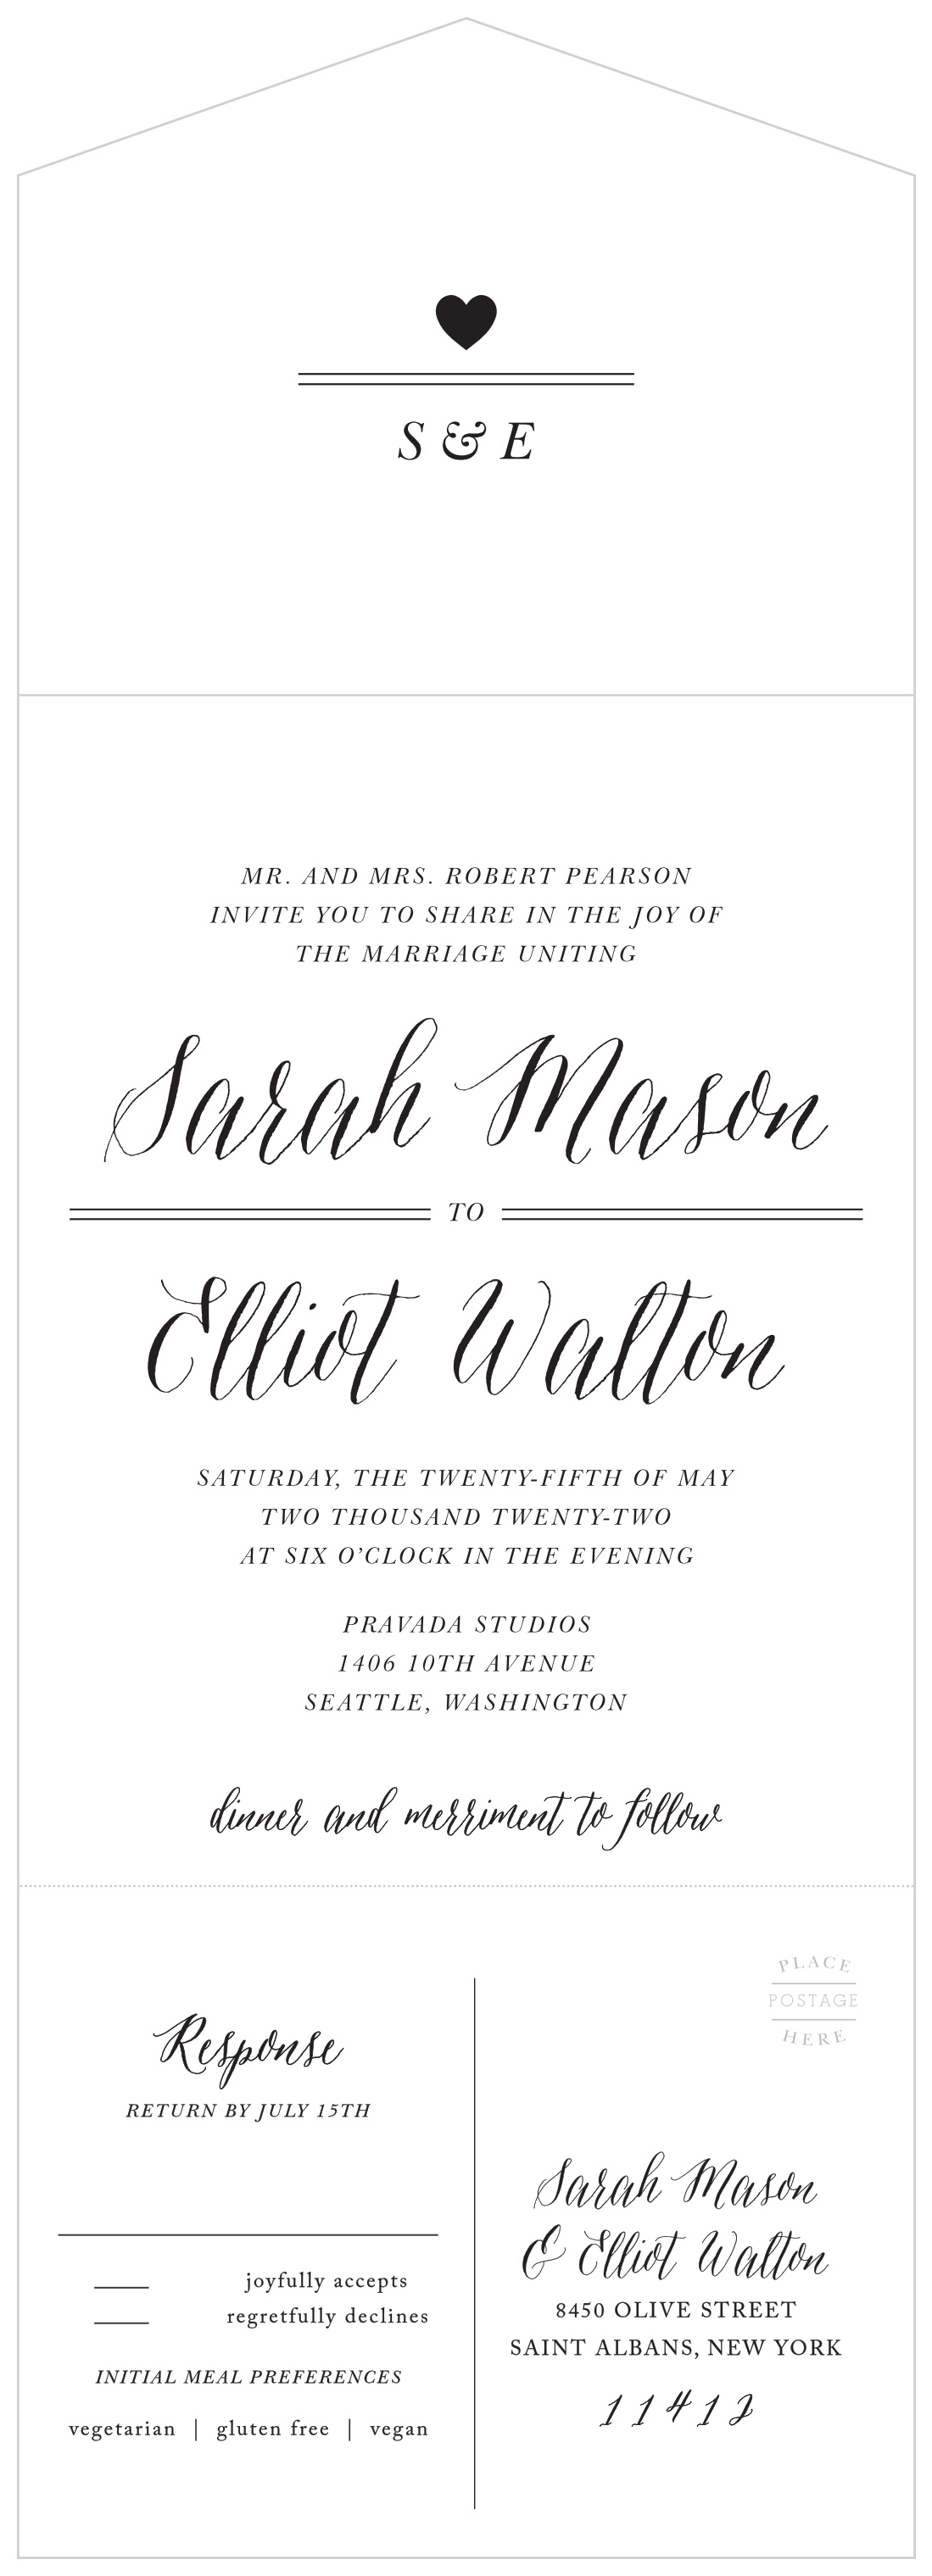 Rustic Chic Seal & Send Wedding Invitations